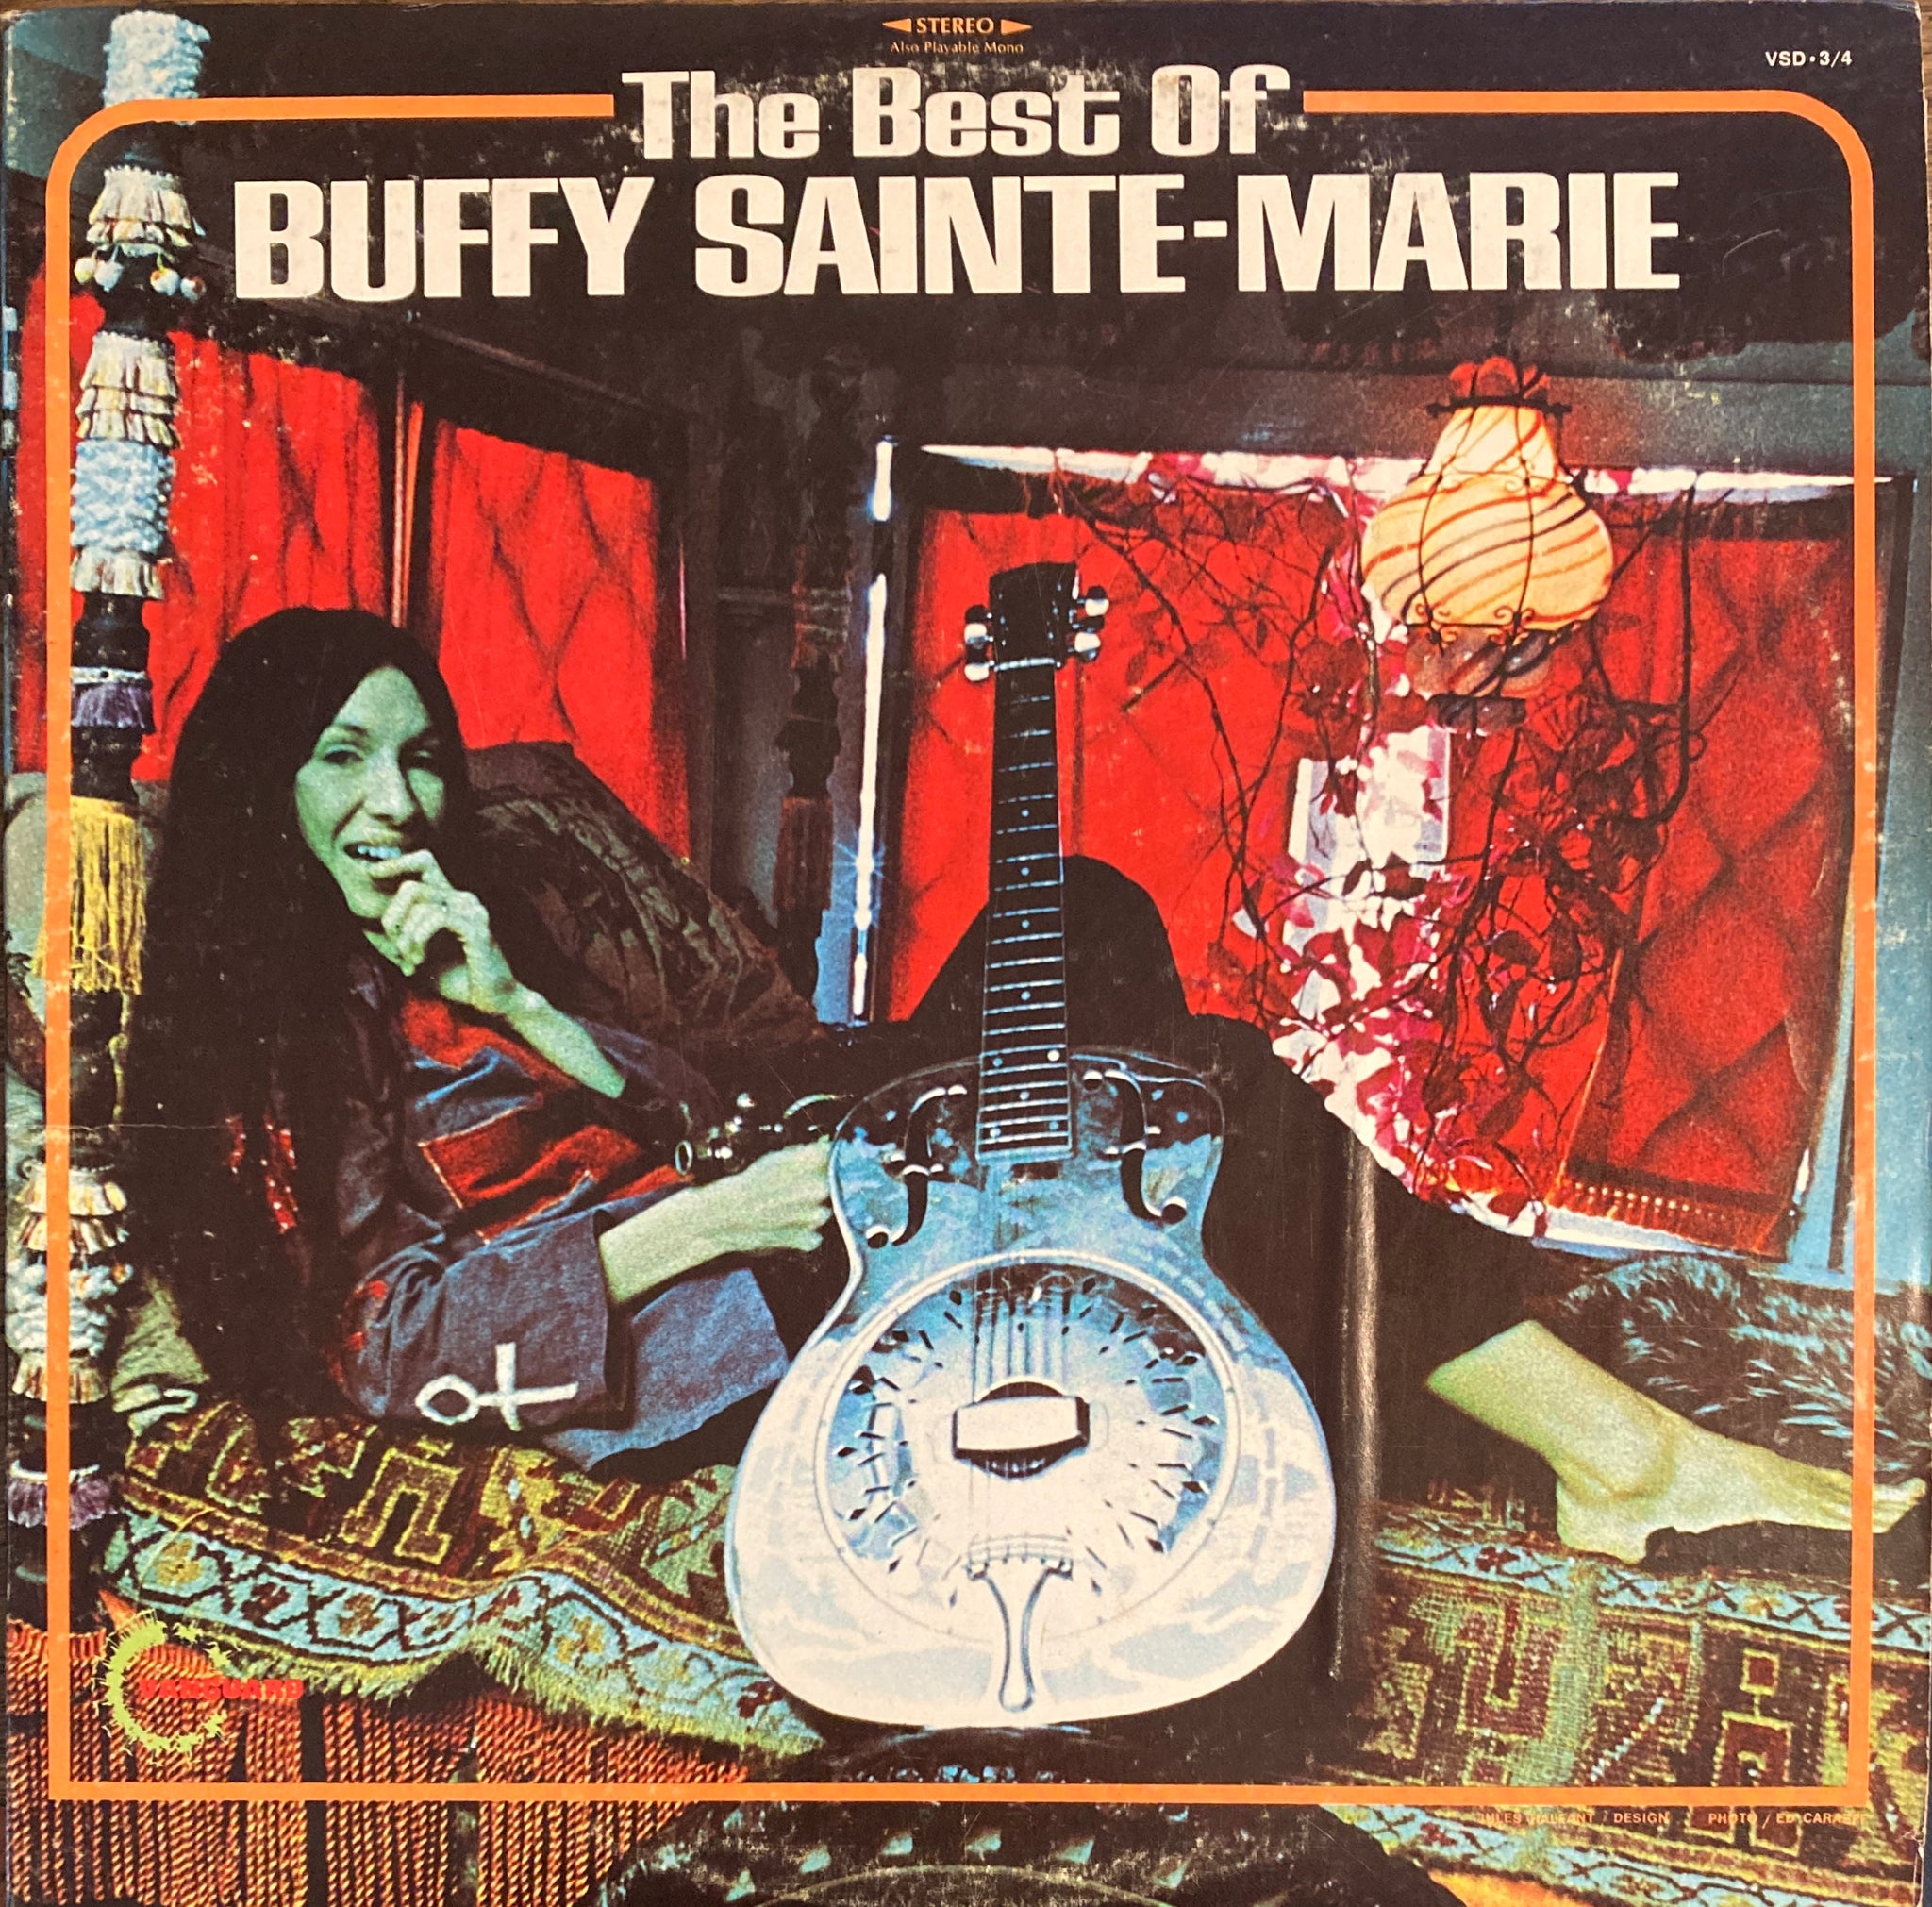 Buffy Sainte-Marie "The Best Of" 2XLP (1970)